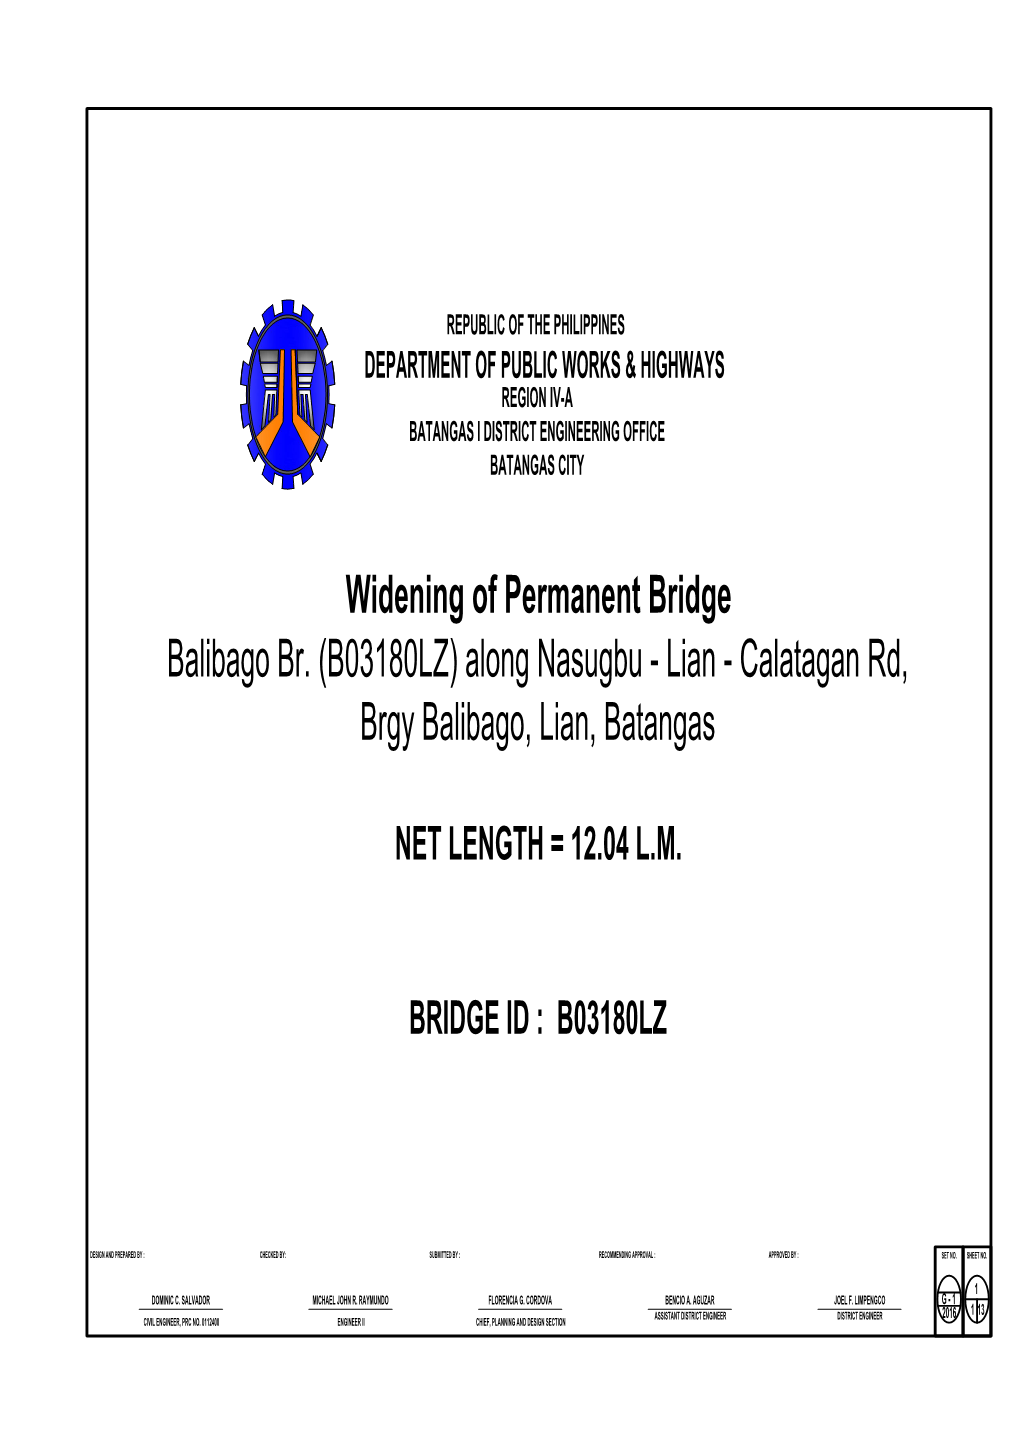 Widening of Permanent Bridge Balibago Br. (B03180LZ) Along Nasugbu - Lian - Calatagan Rd, Brgy Balibago, Lian, Batangas